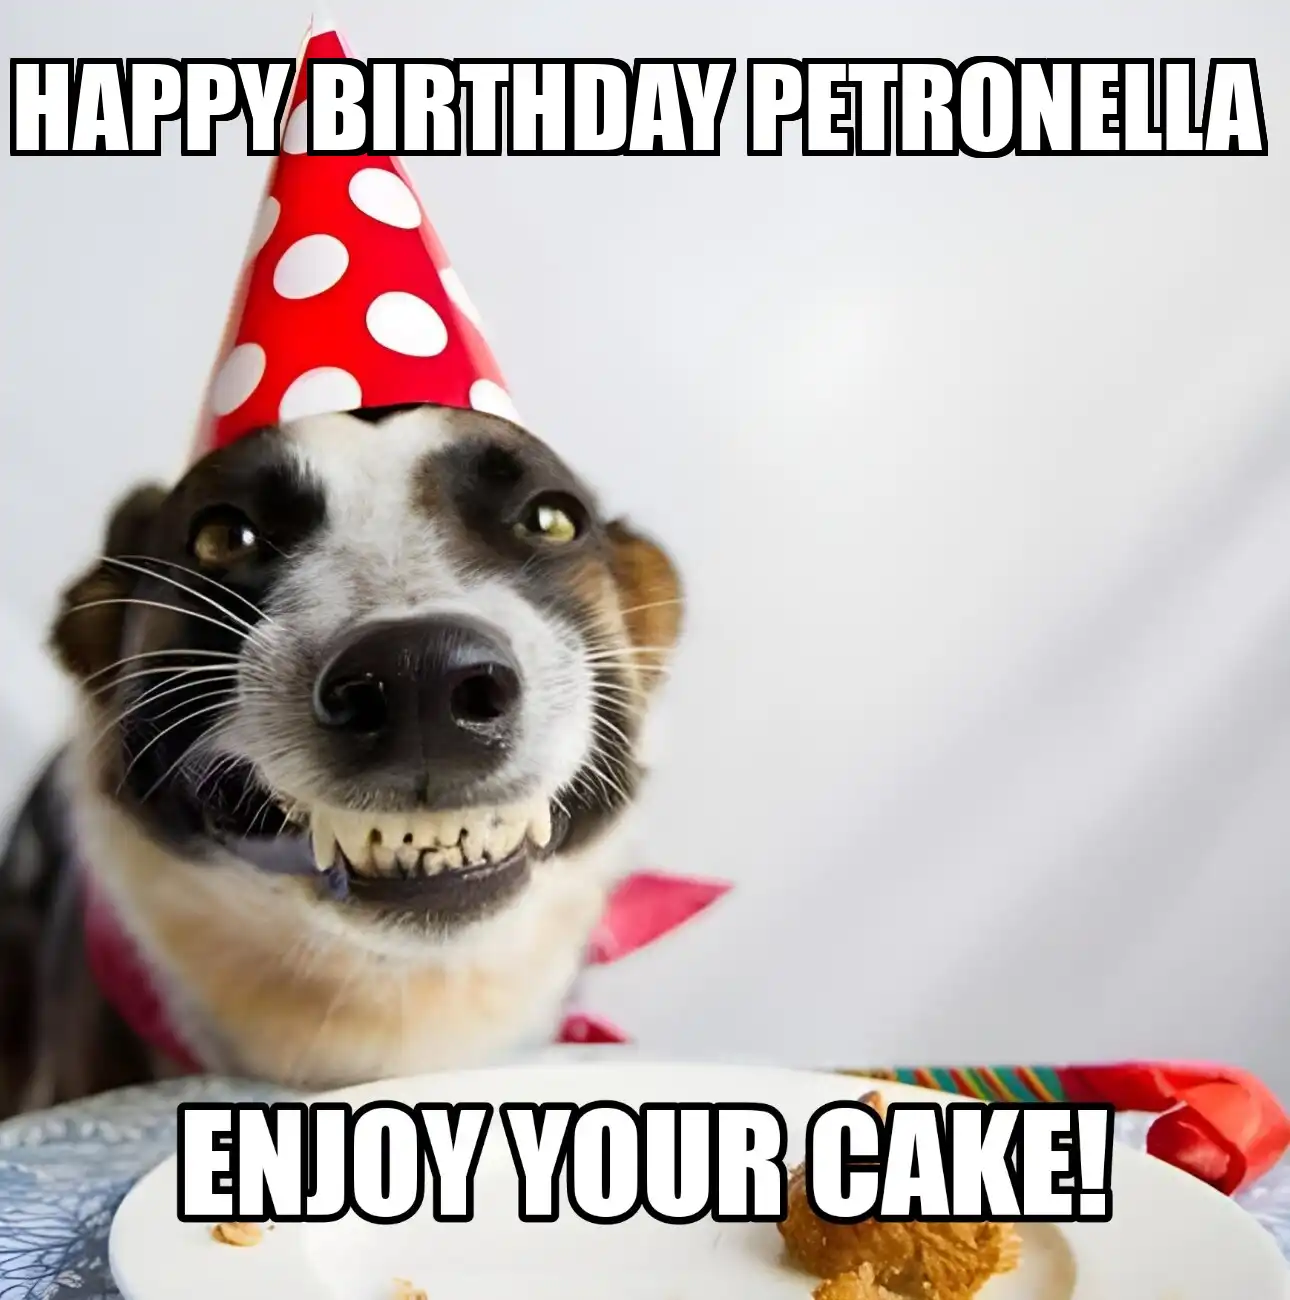 Happy Birthday Petronella Enjoy Your Cake Dog Meme